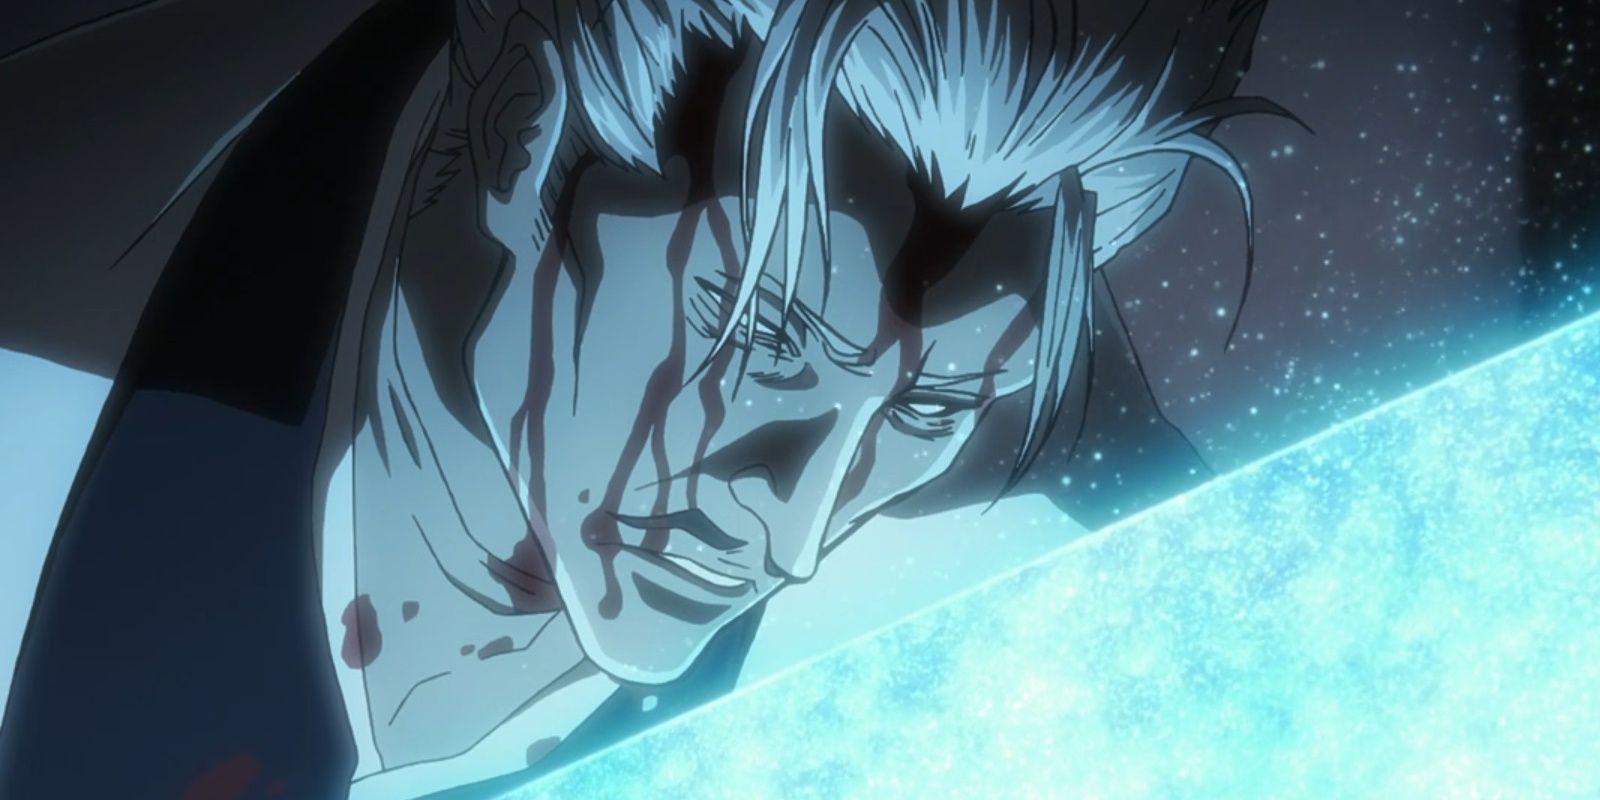 chojiro sasakibe just got stabbed in the bleach anime